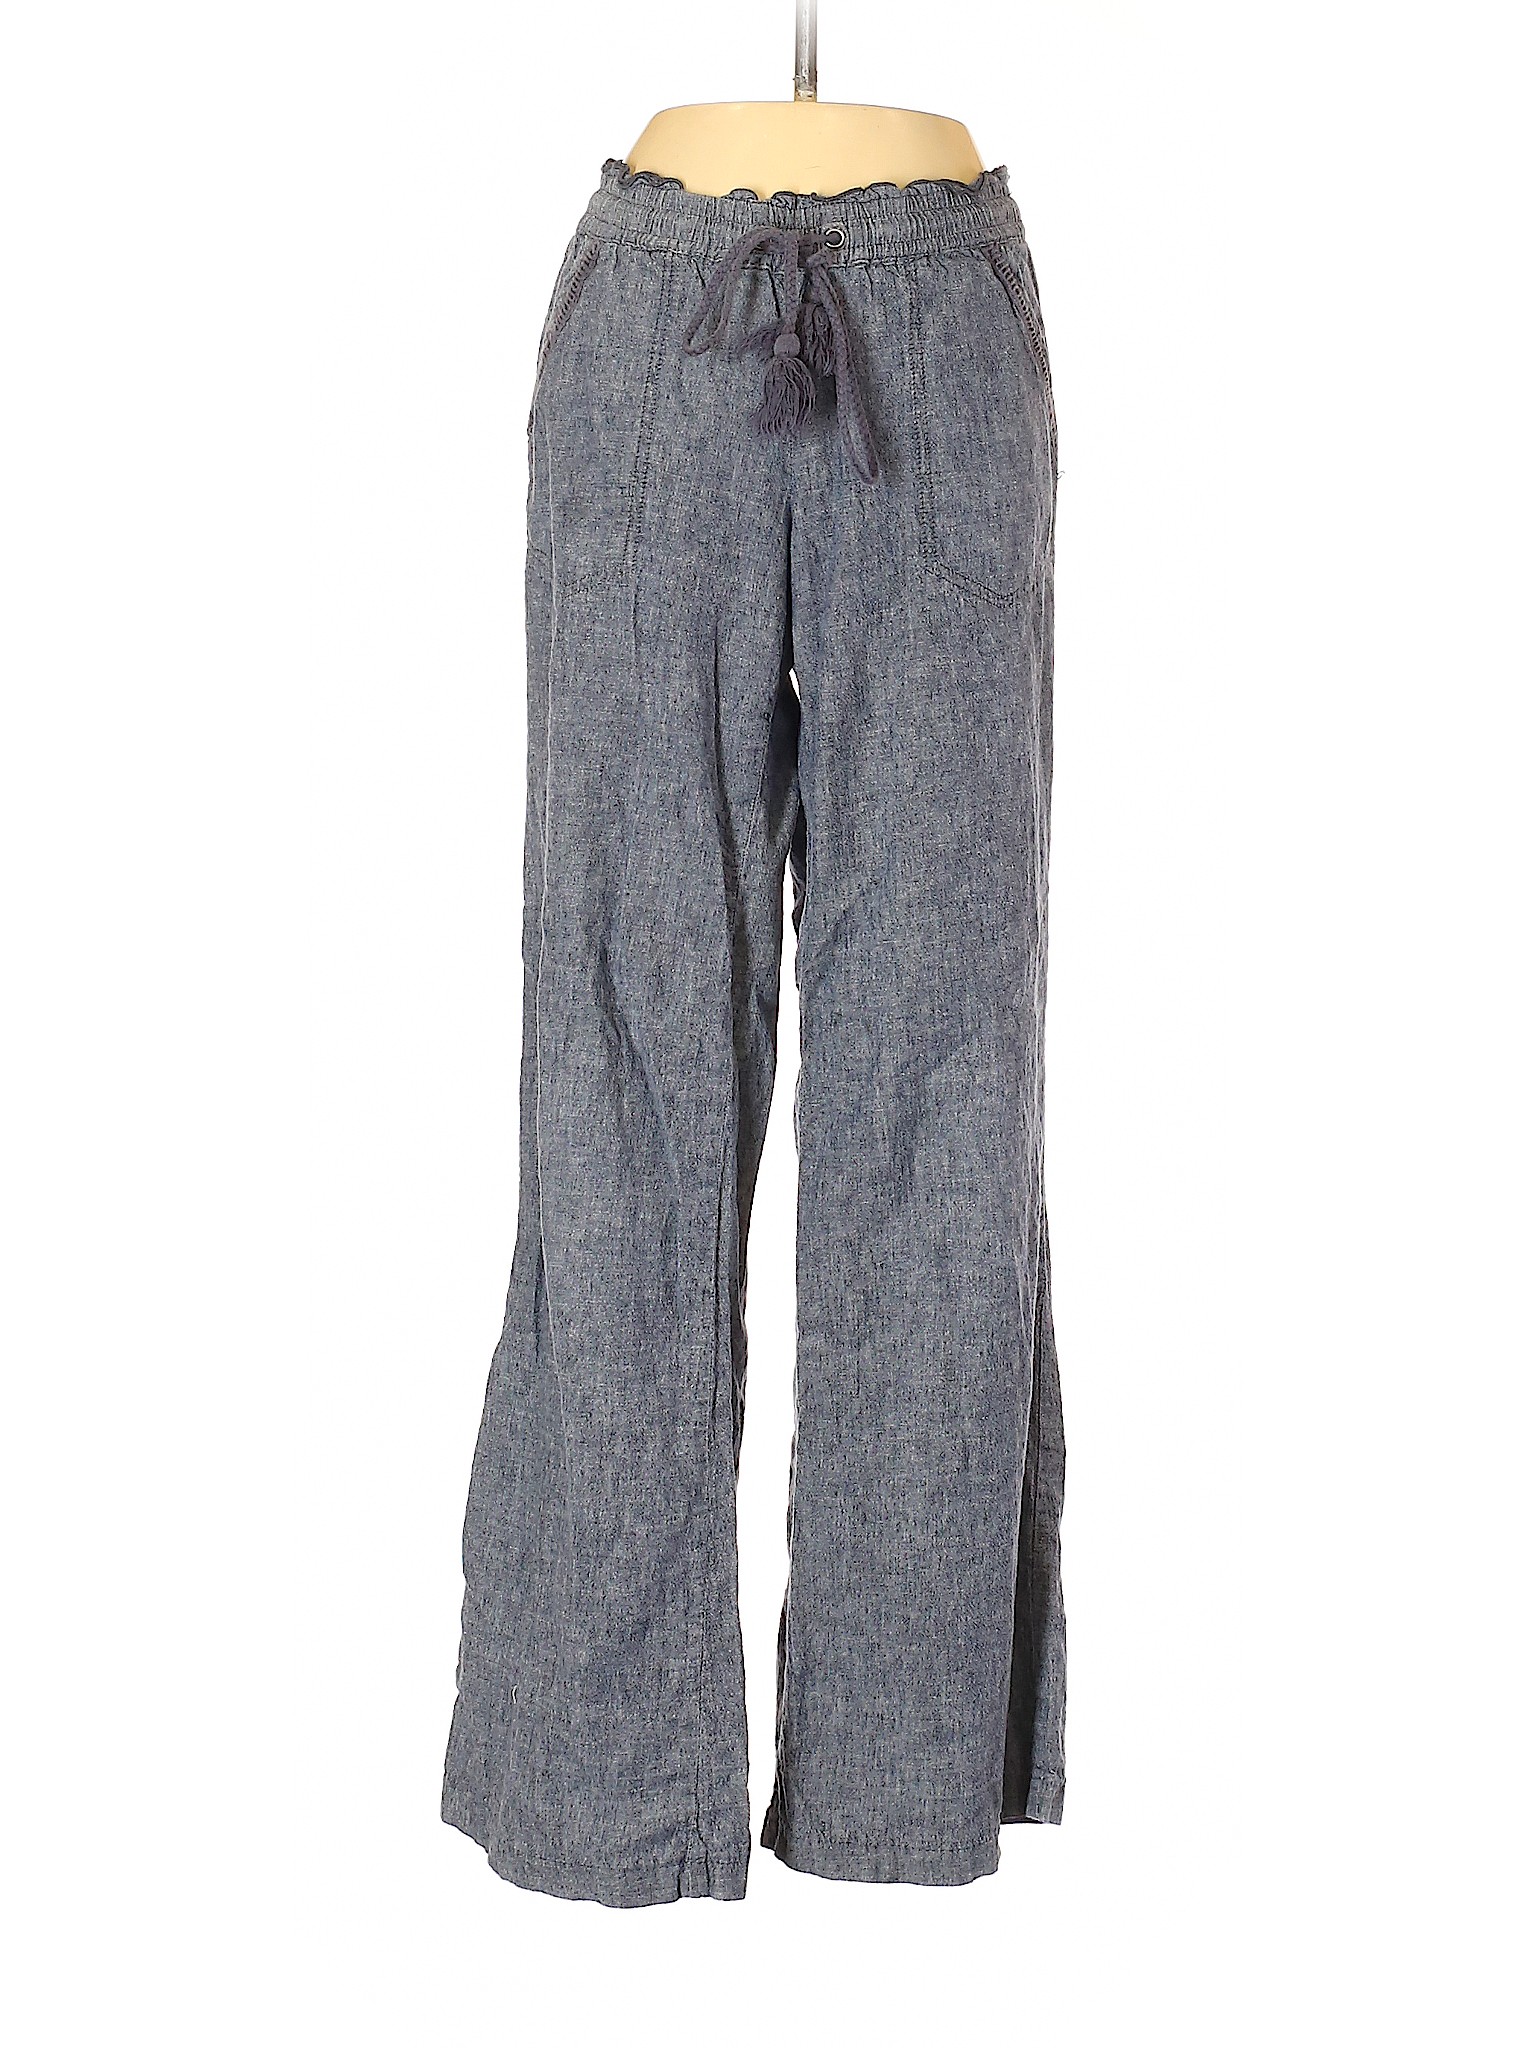 Rewind Women Gray Linen Pants S | eBay